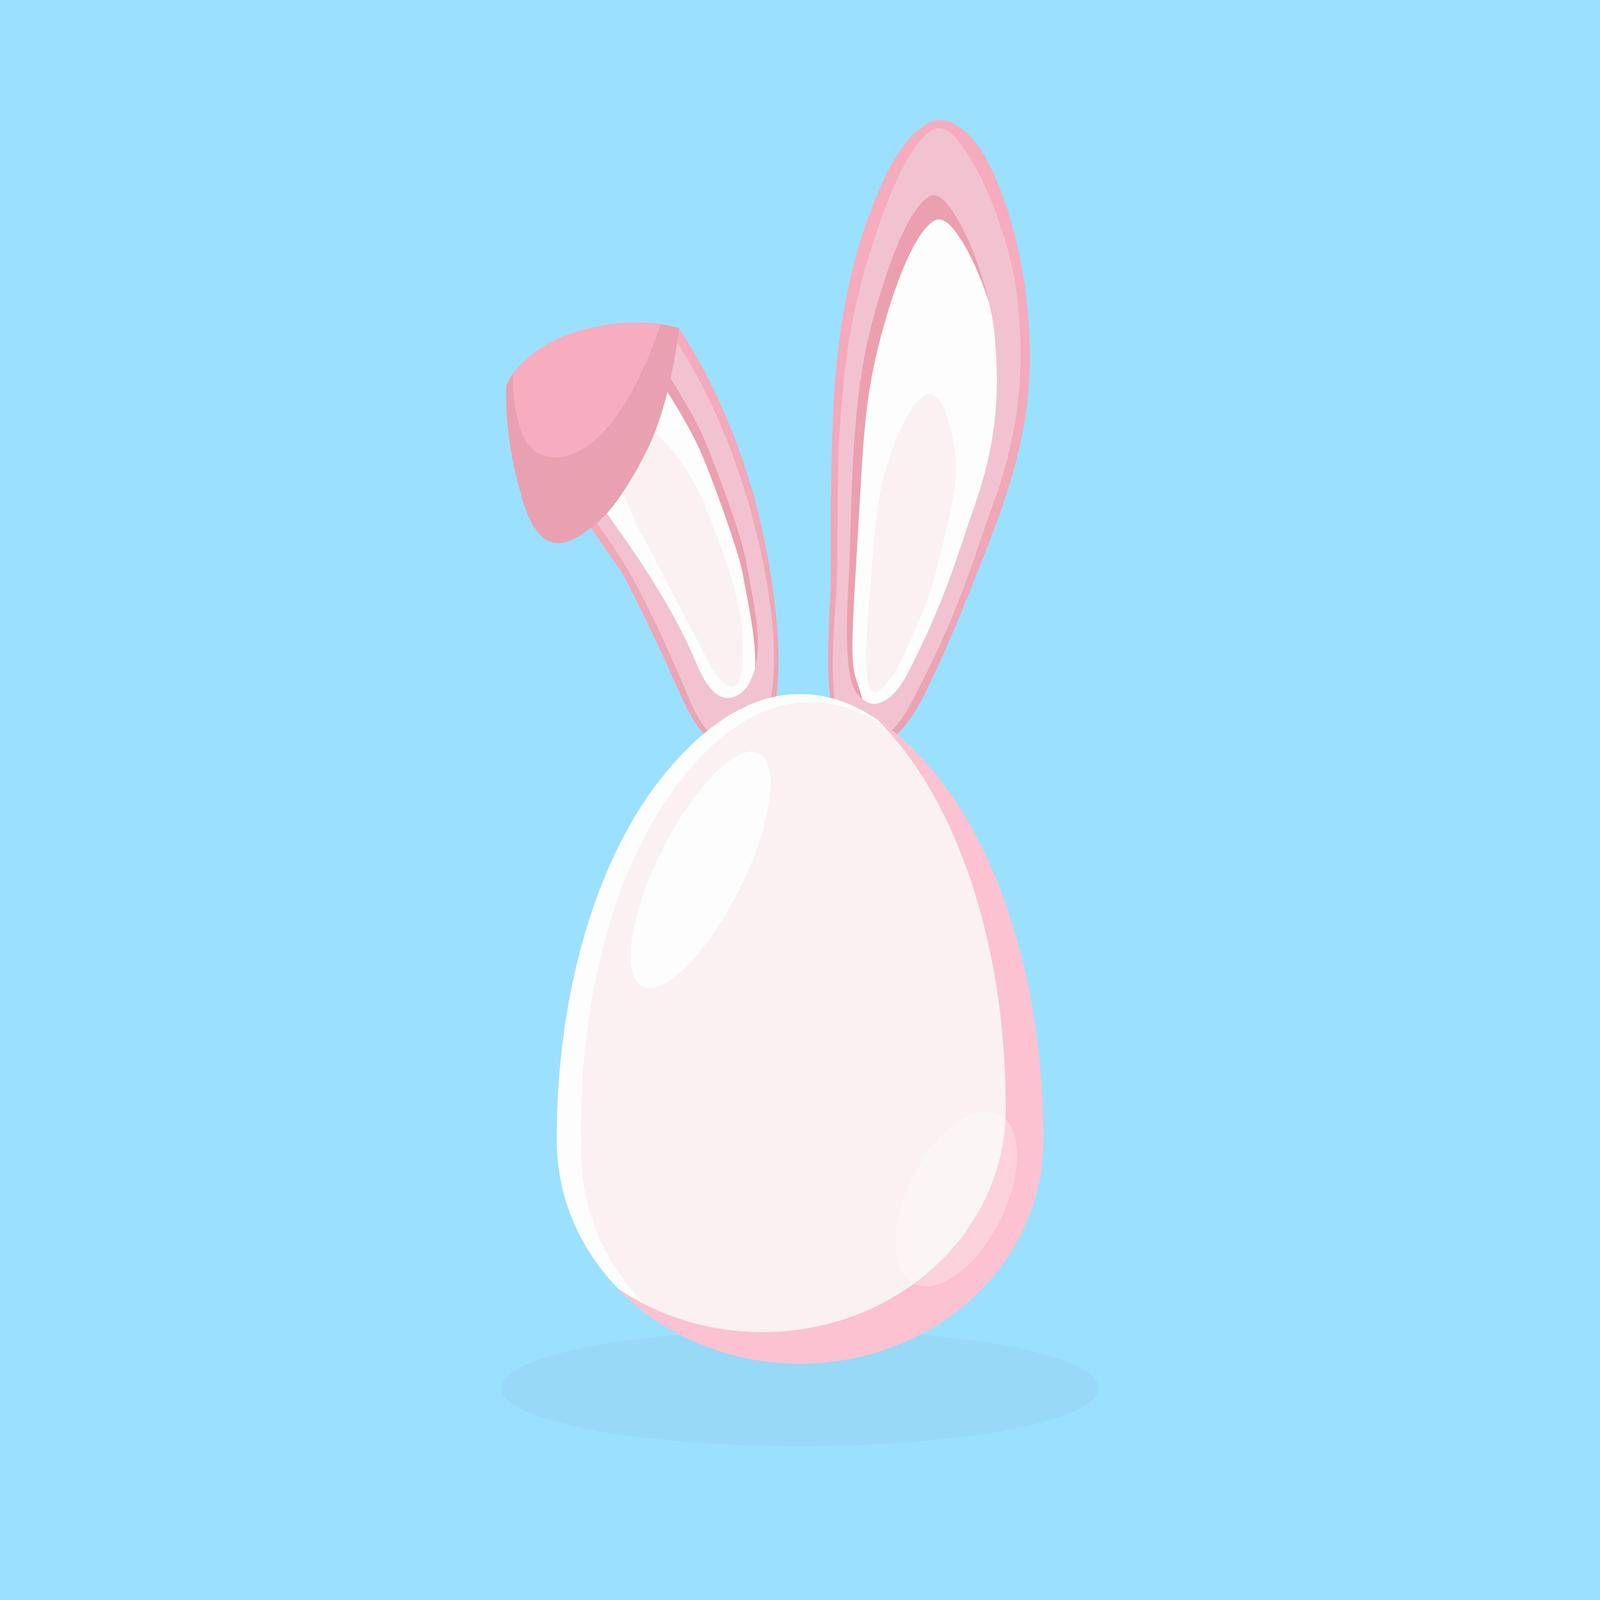 Easter egg shape with bunny ears silhouette by Valeriya_Dor